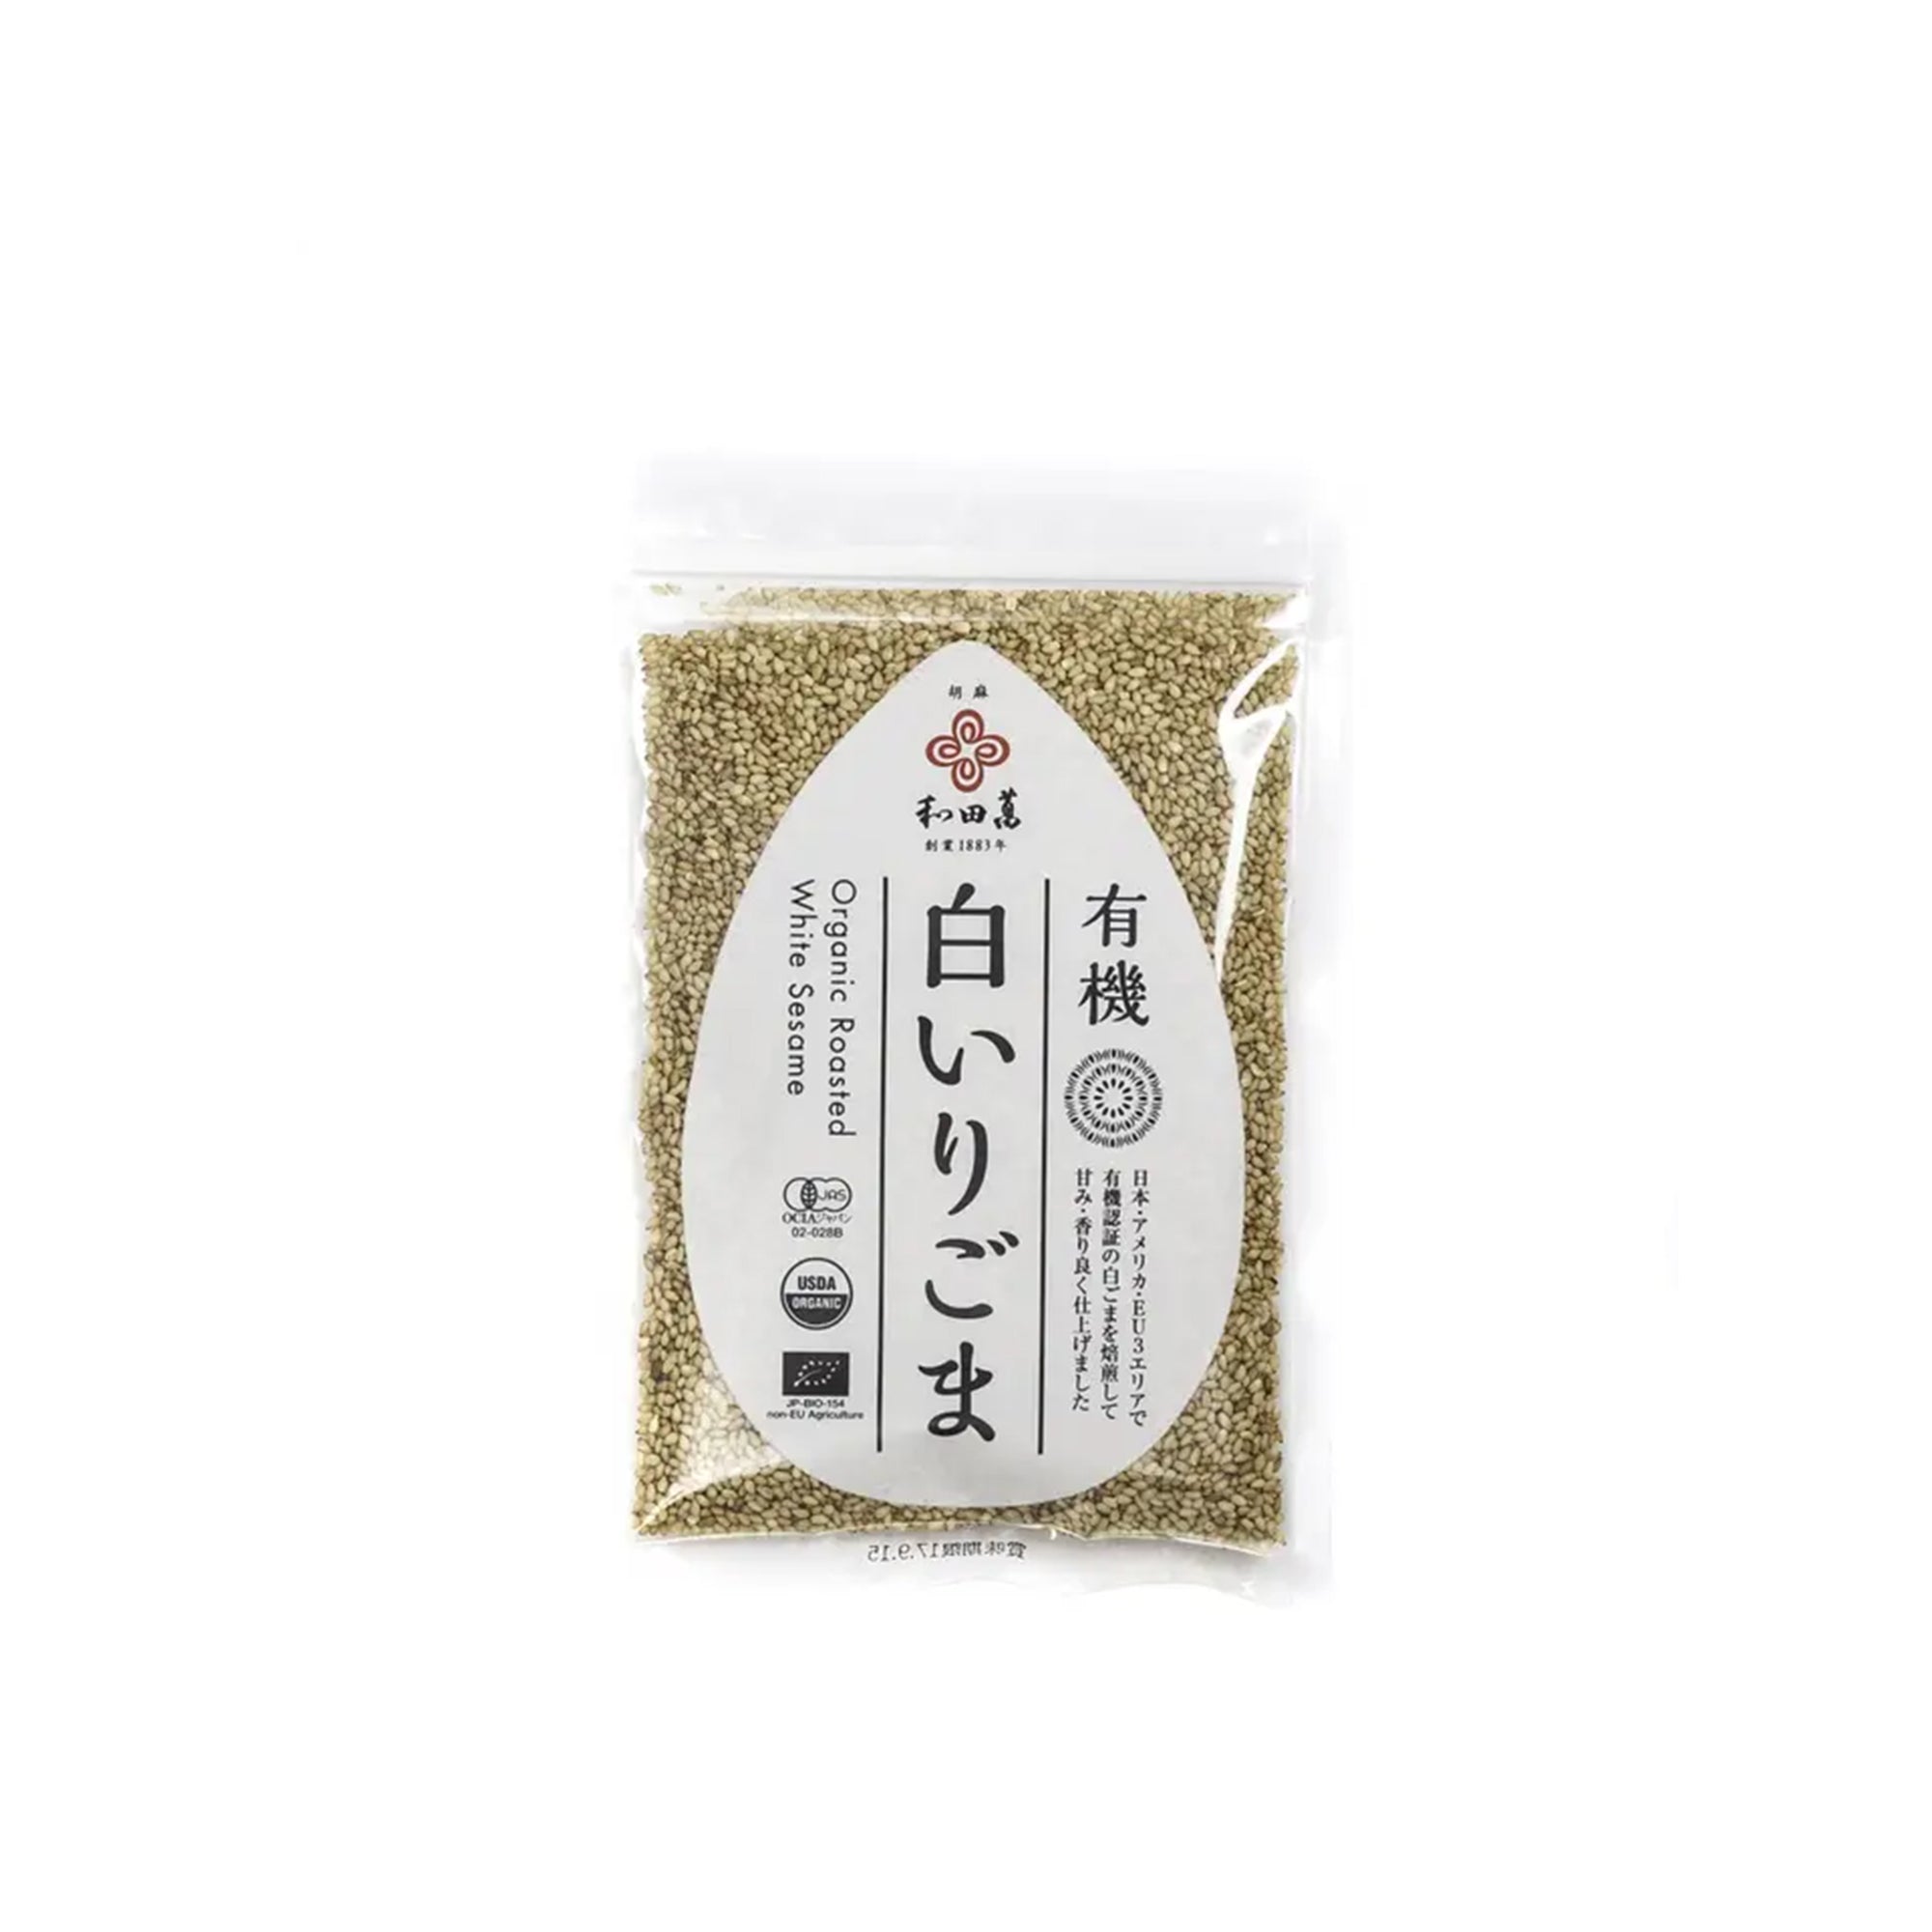 Roasted White Sesame Seeds, Organic